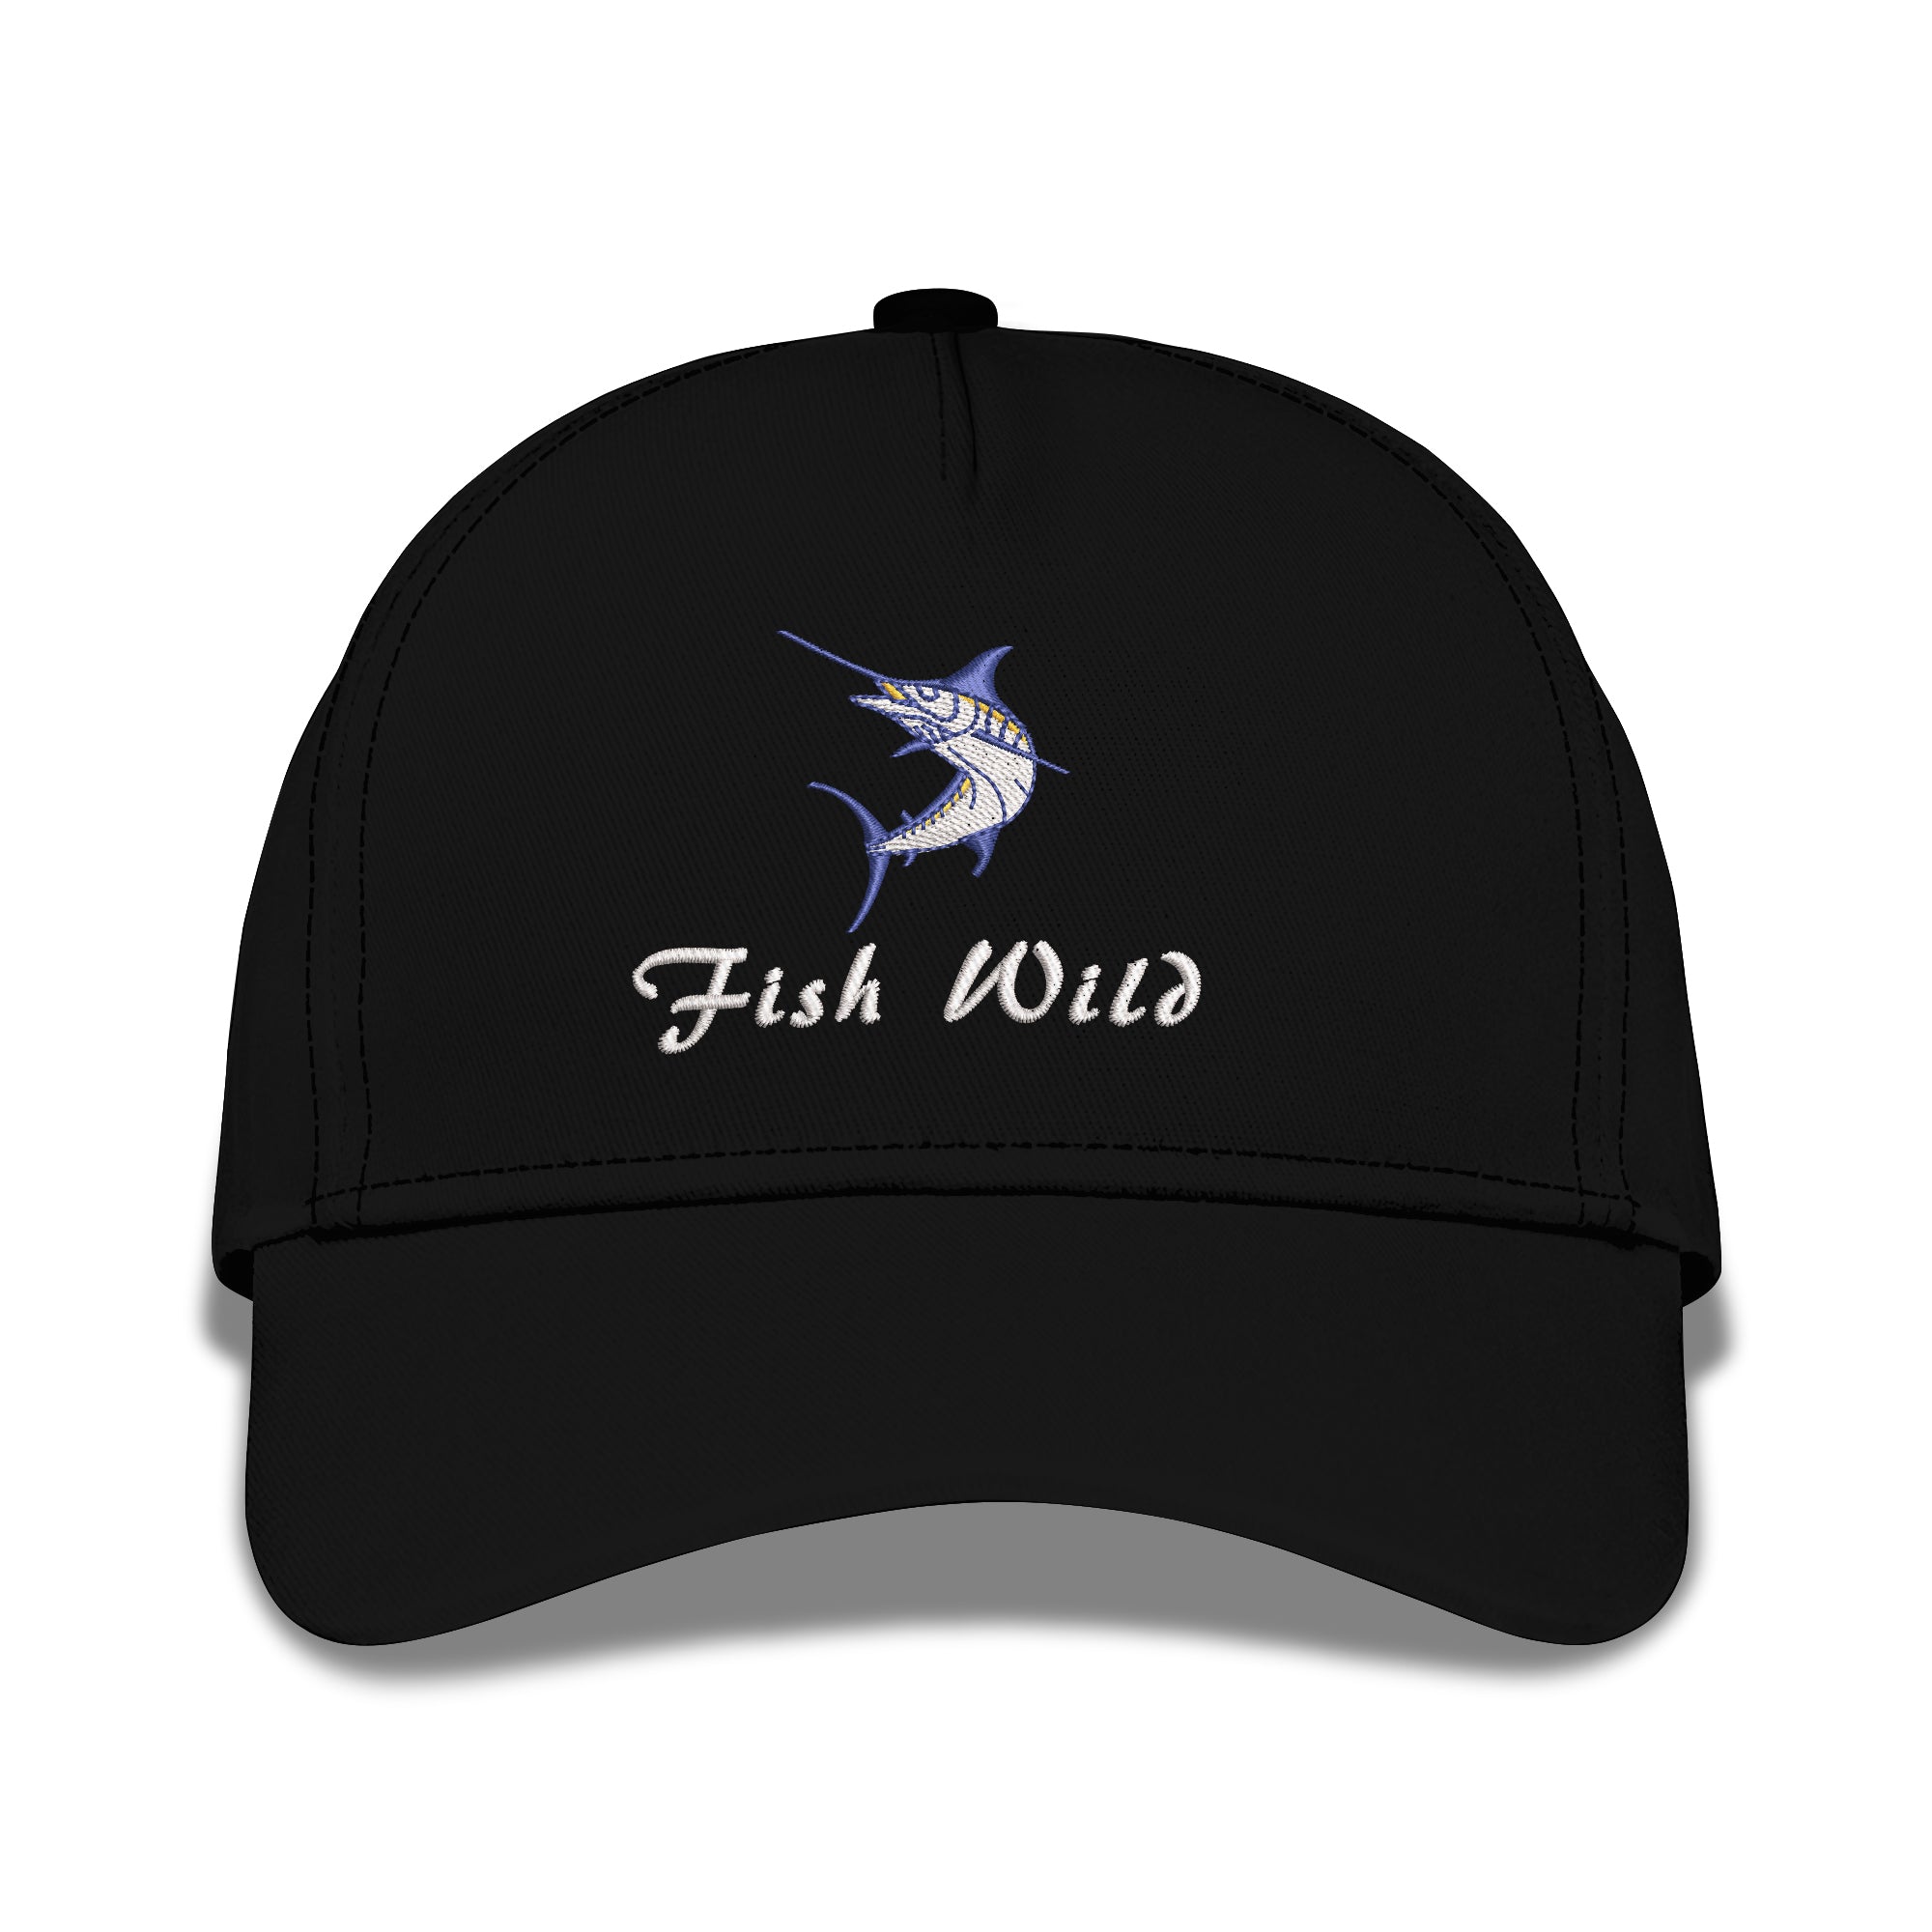 Fish Wild Embroidered Baseball Caps Fishing